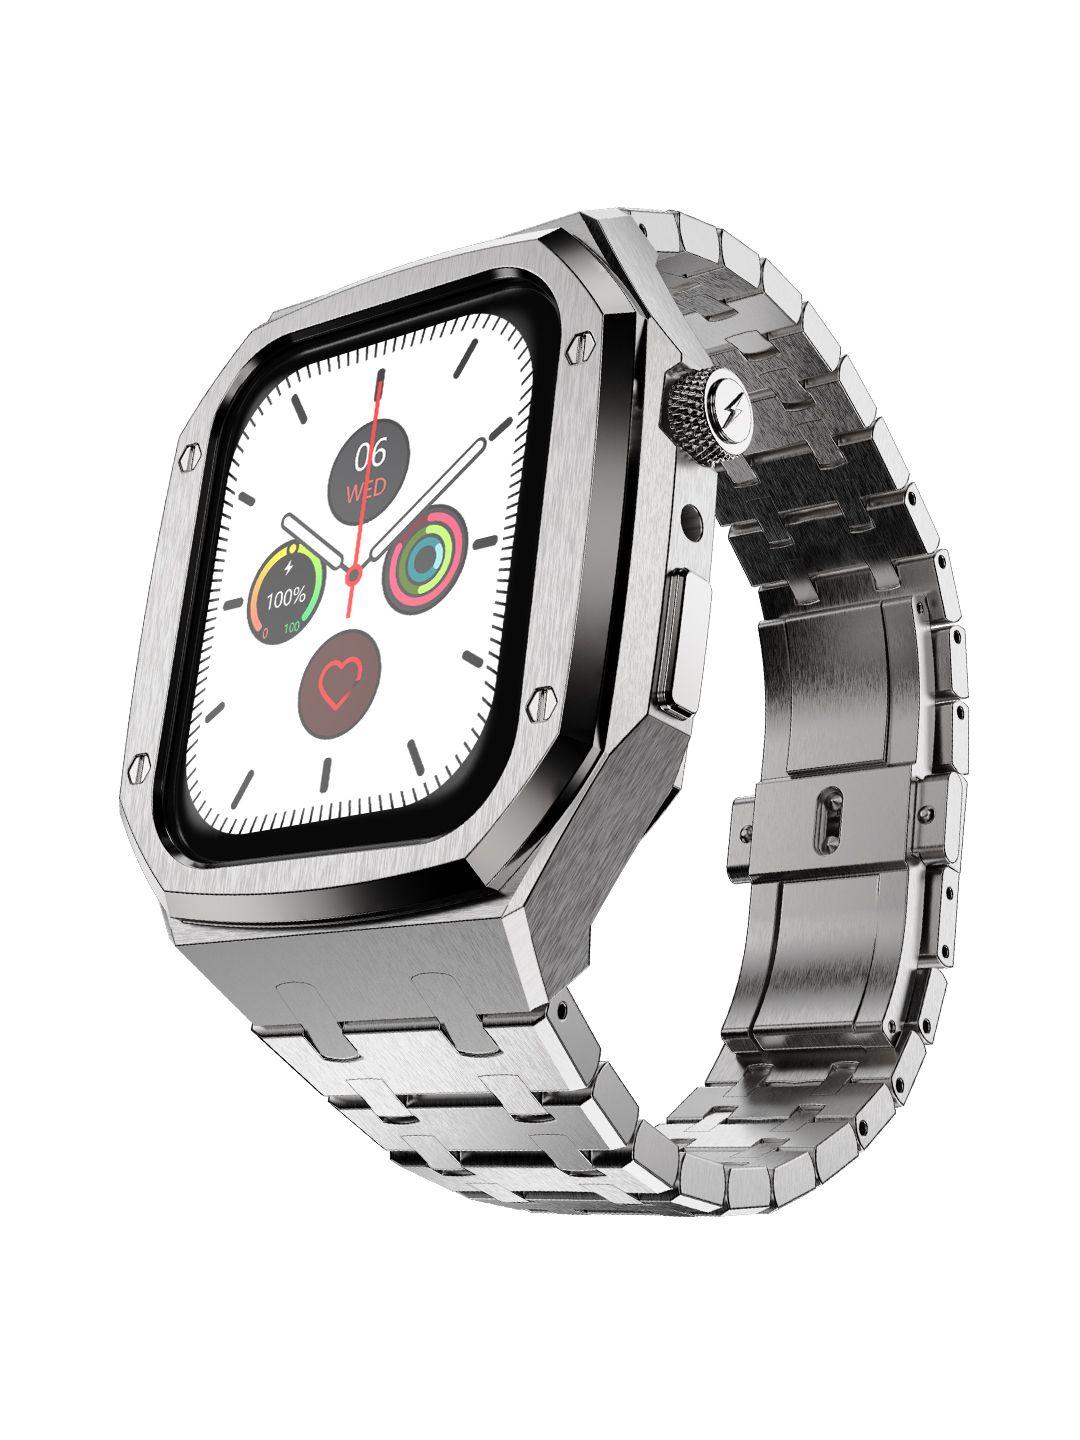 fire-boltt elemento 1.95" ips display smartwatch with bt calling